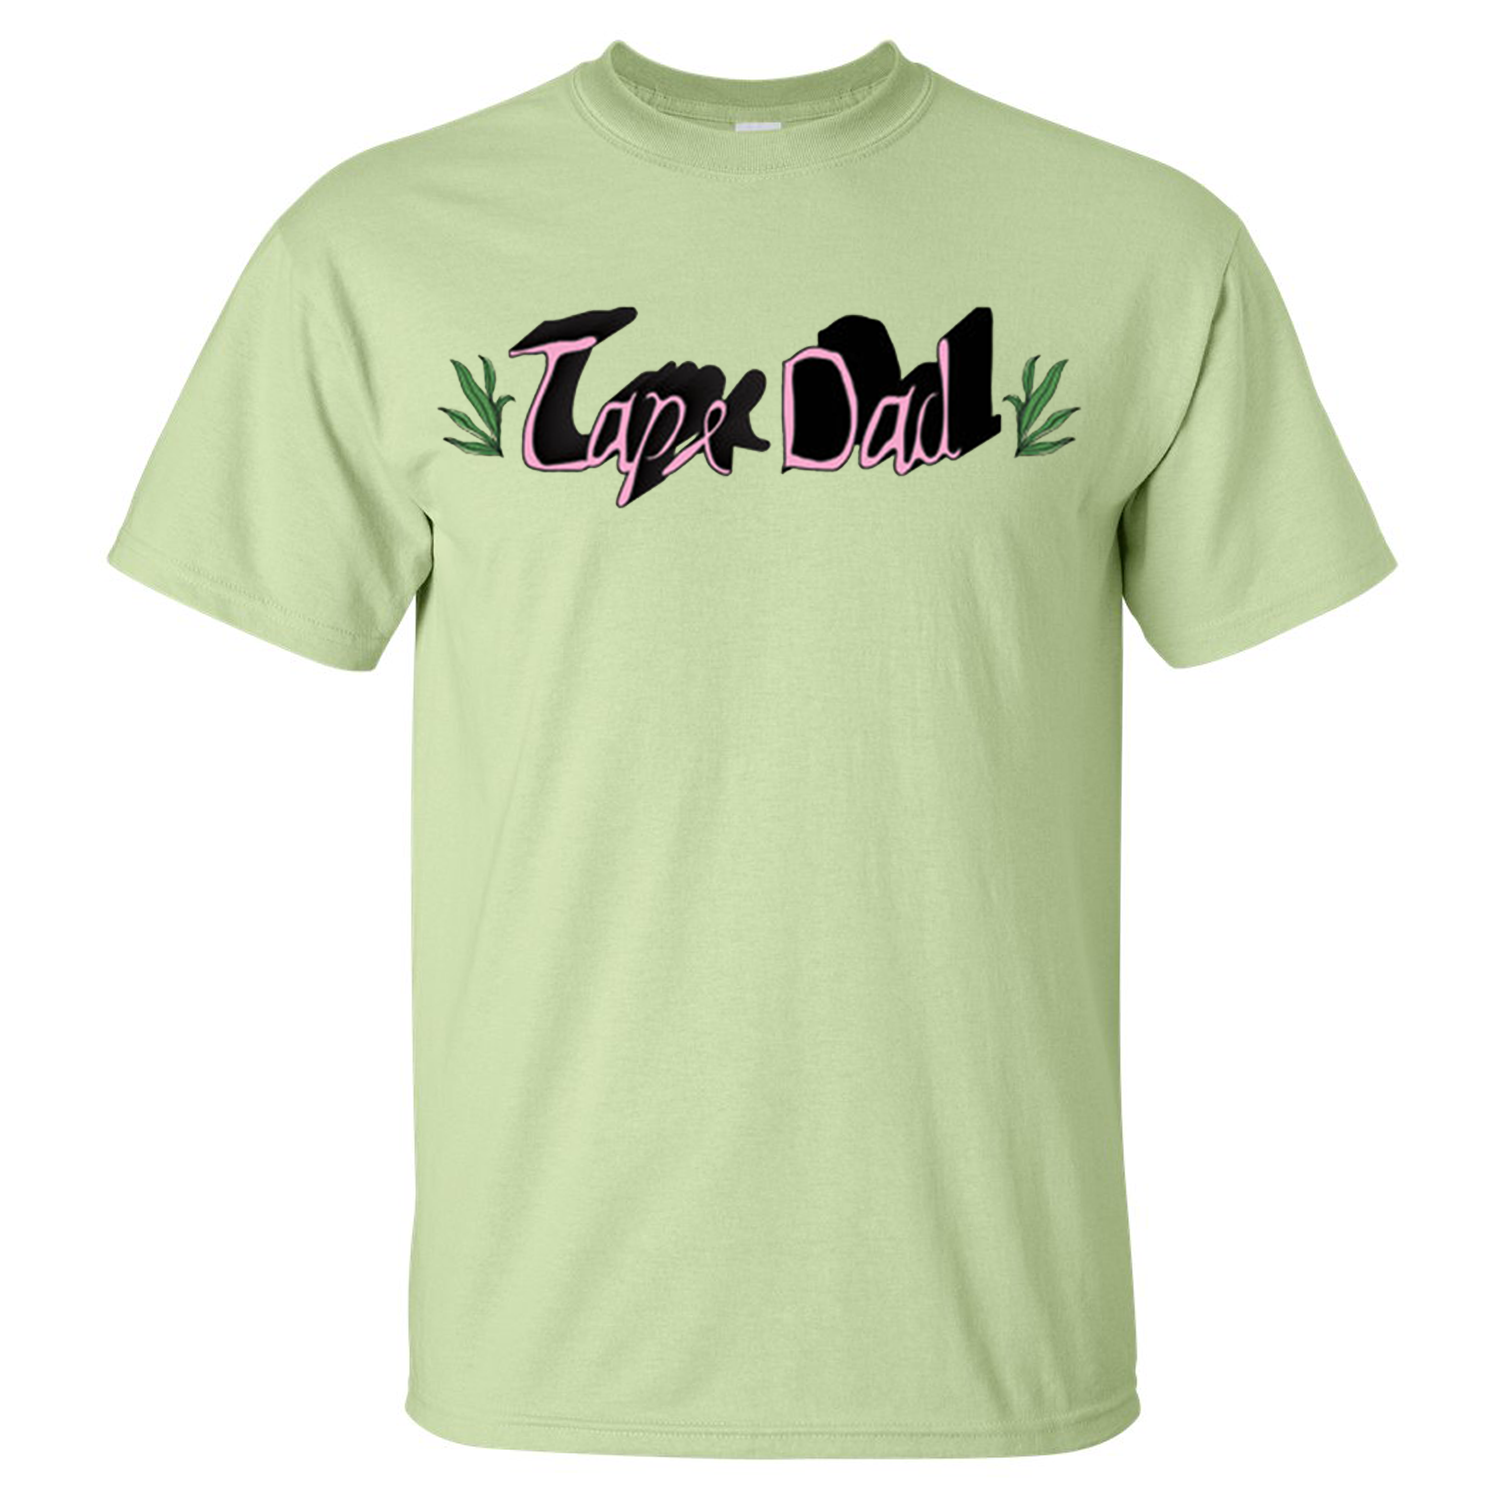 Tape Dad Comp Shirt